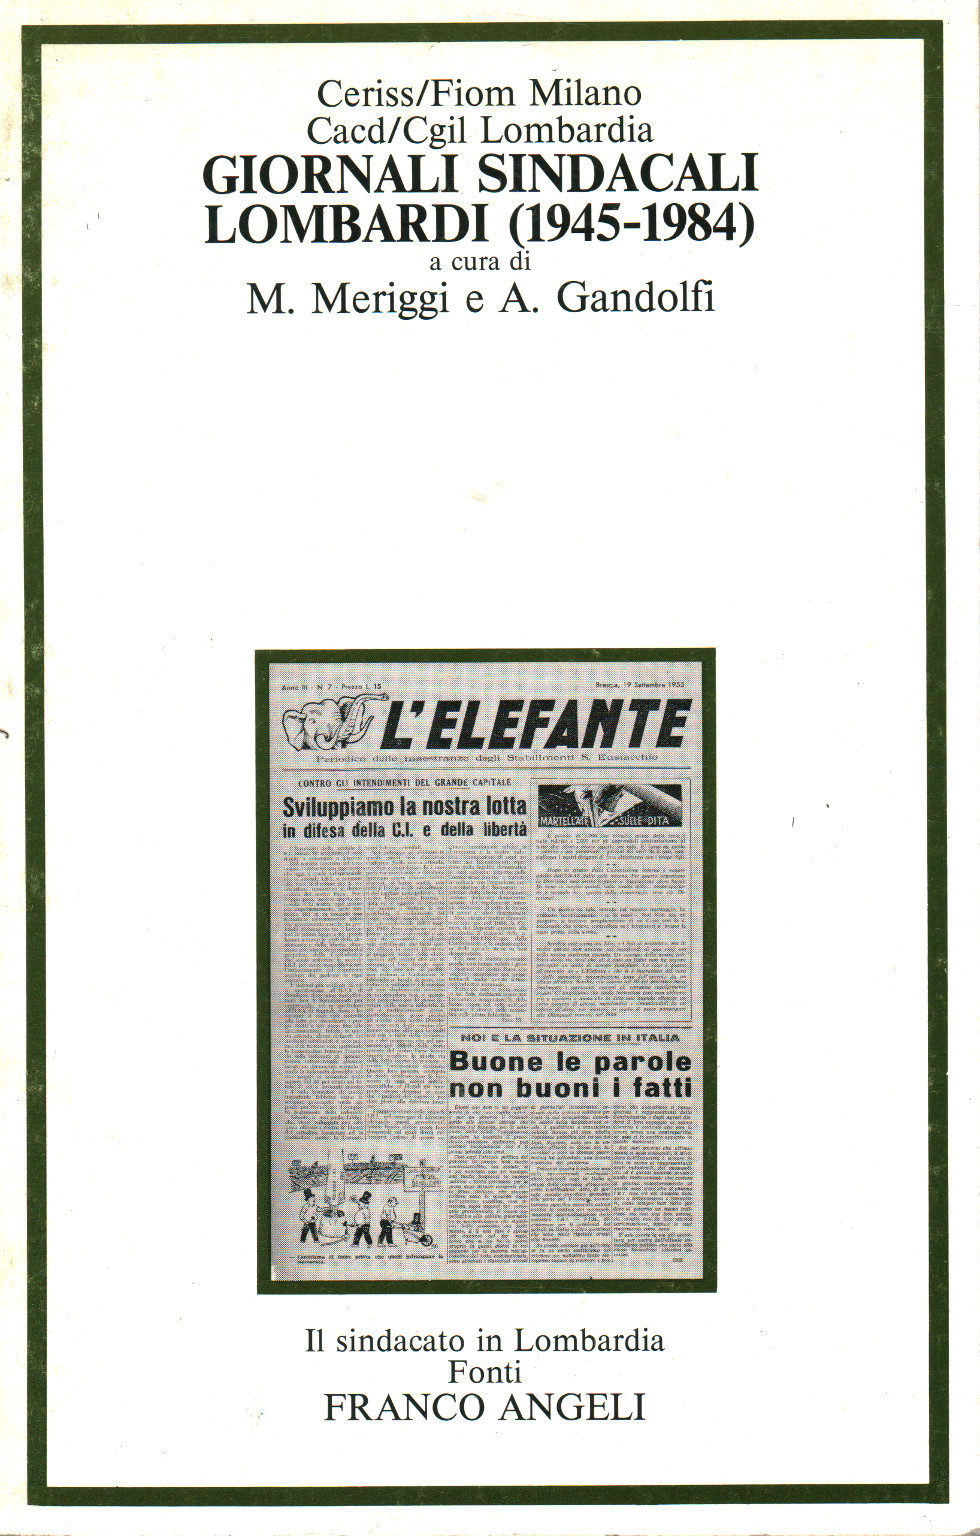 Giornali sindacali lombardi (1945-1984), s.a.